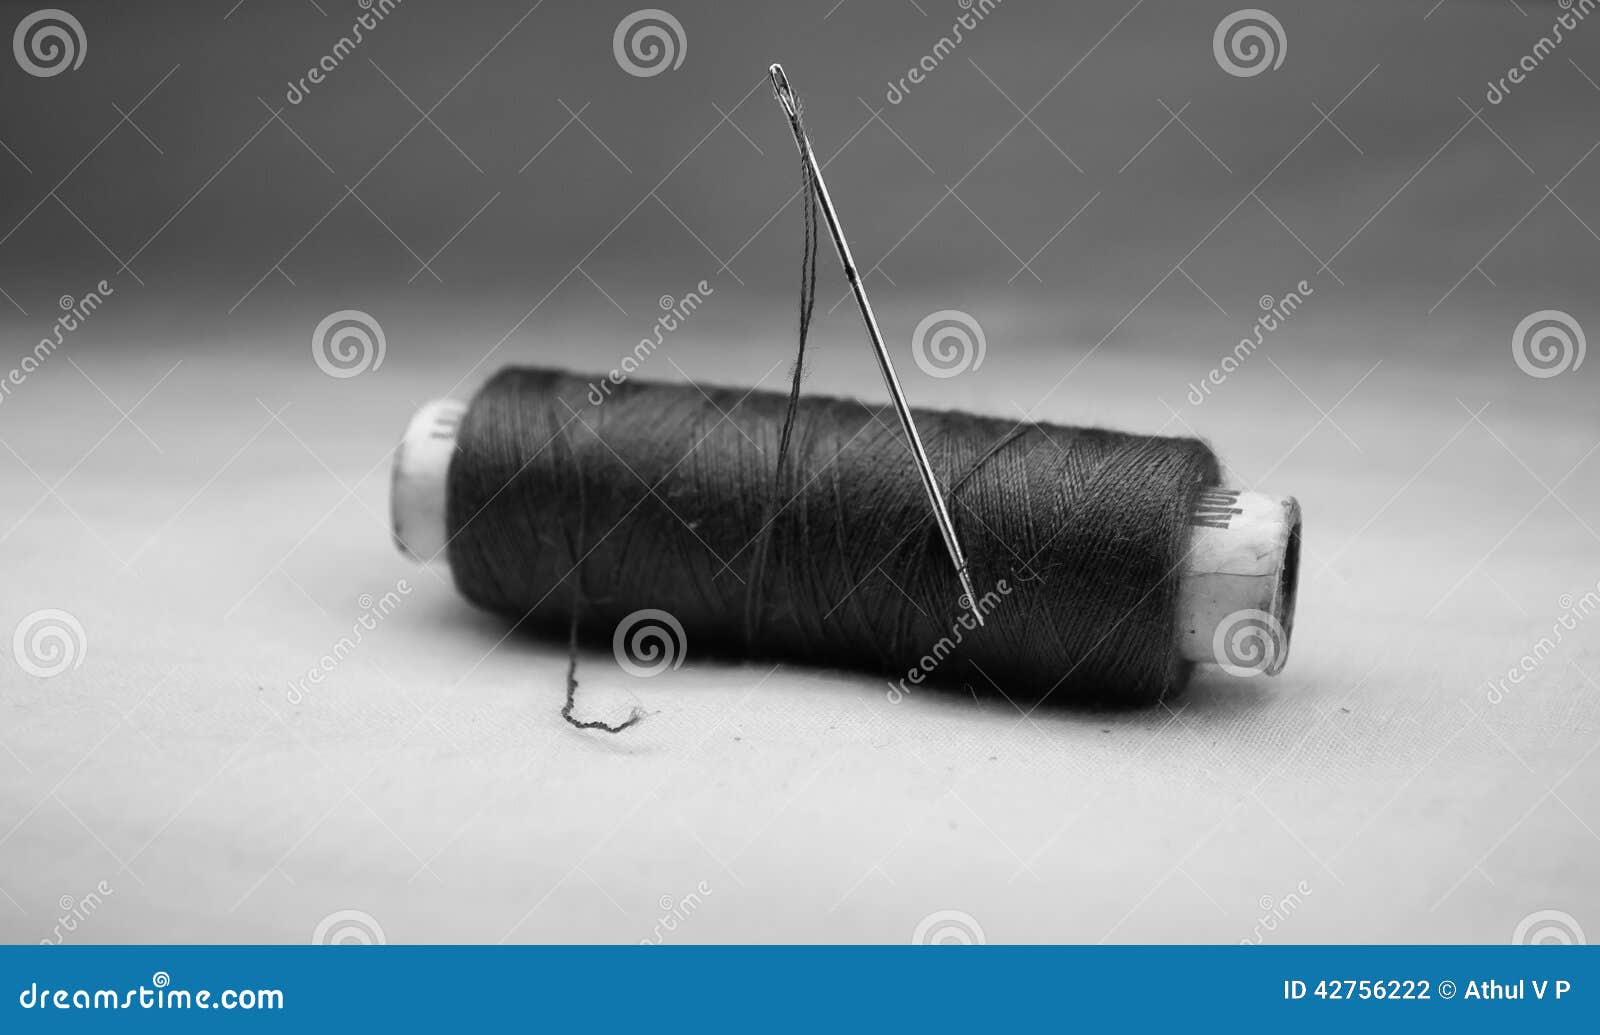 Black thread with needle stock photo. Image of black - 42756222